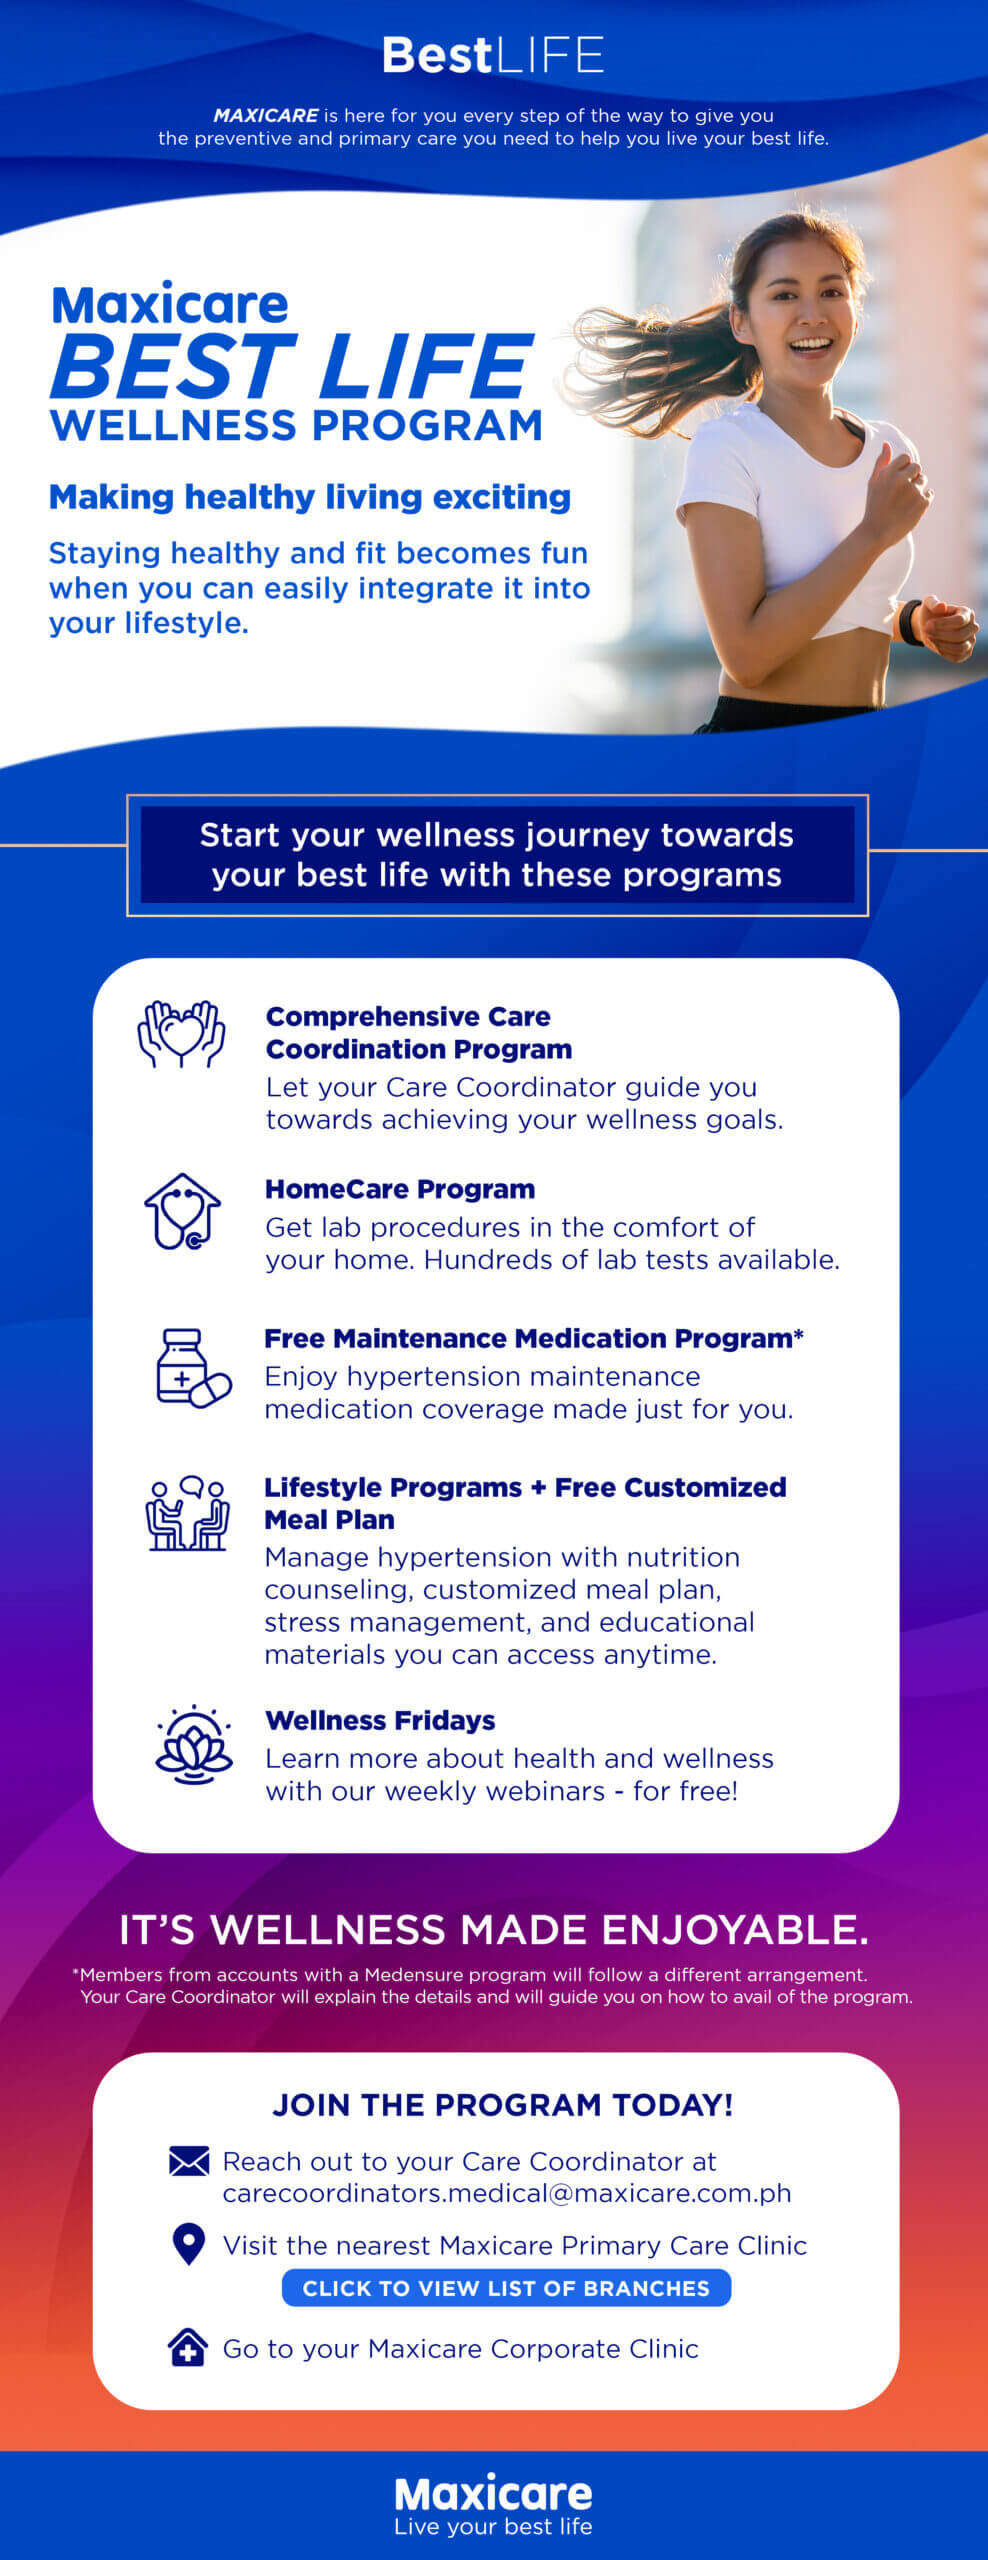 Maxicare BestLife Wellness Program